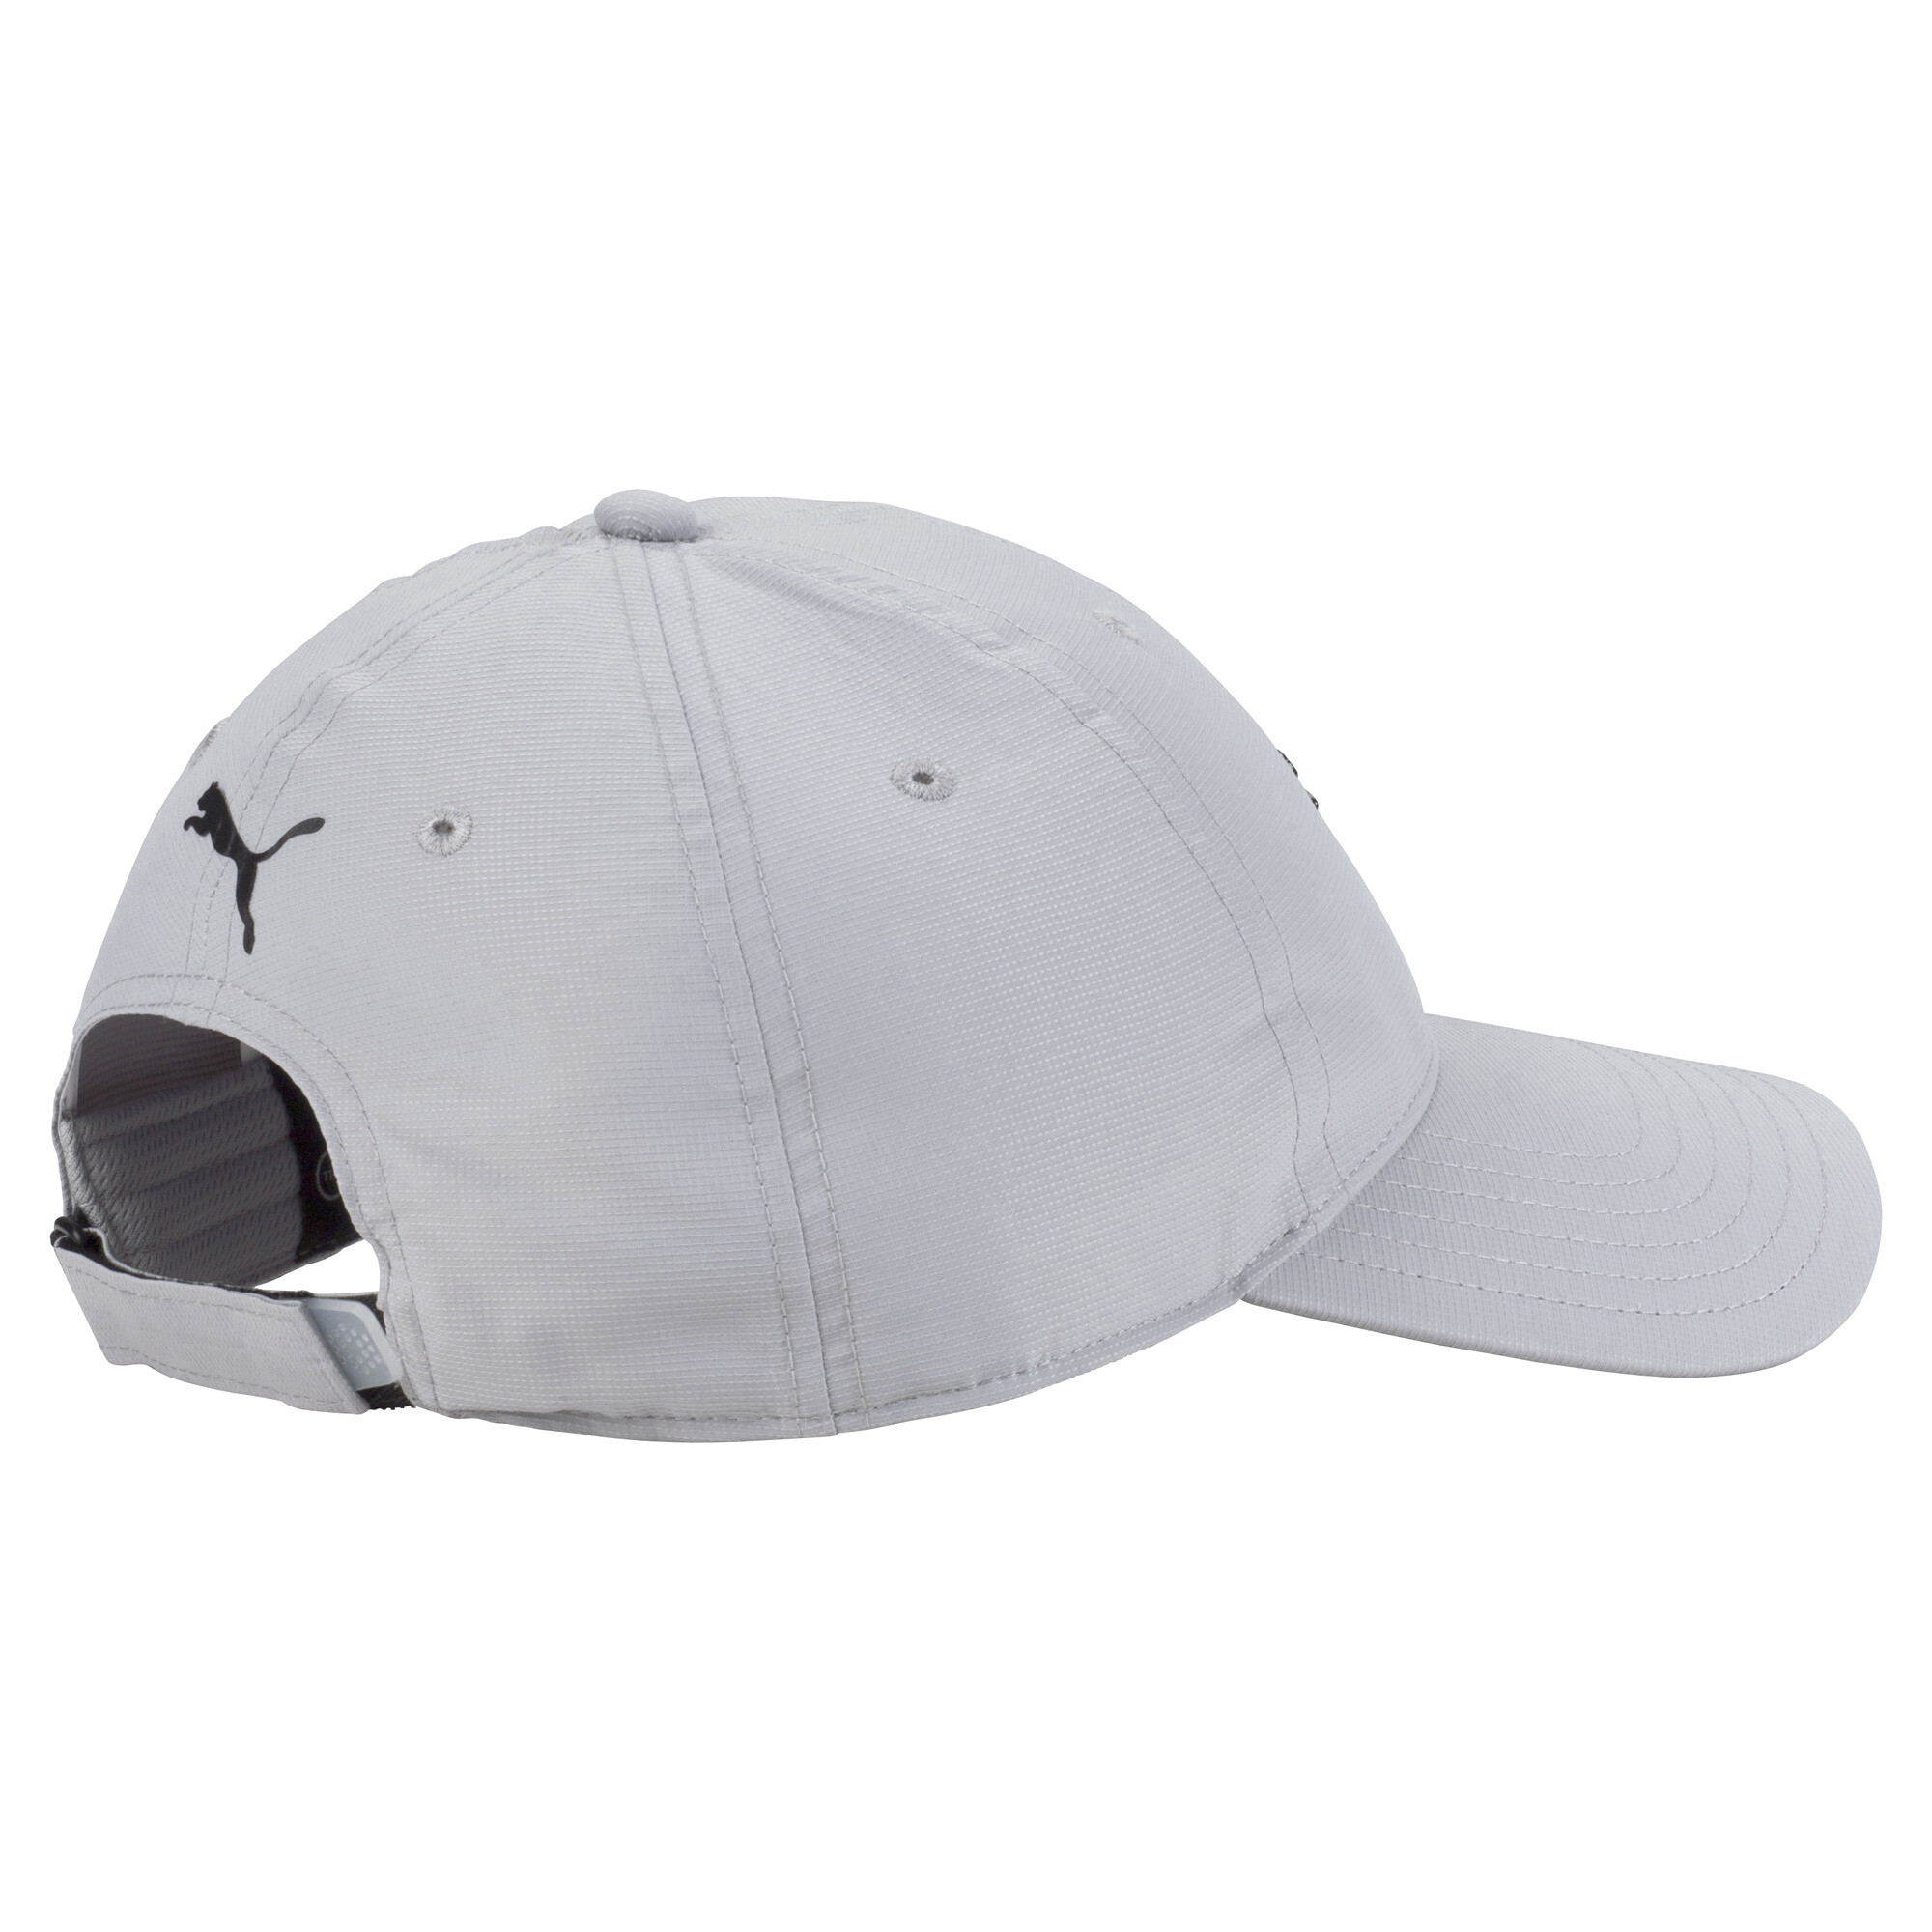 Men's Puma Golf's Pounce Adjustable Cap, Gray, Accessories